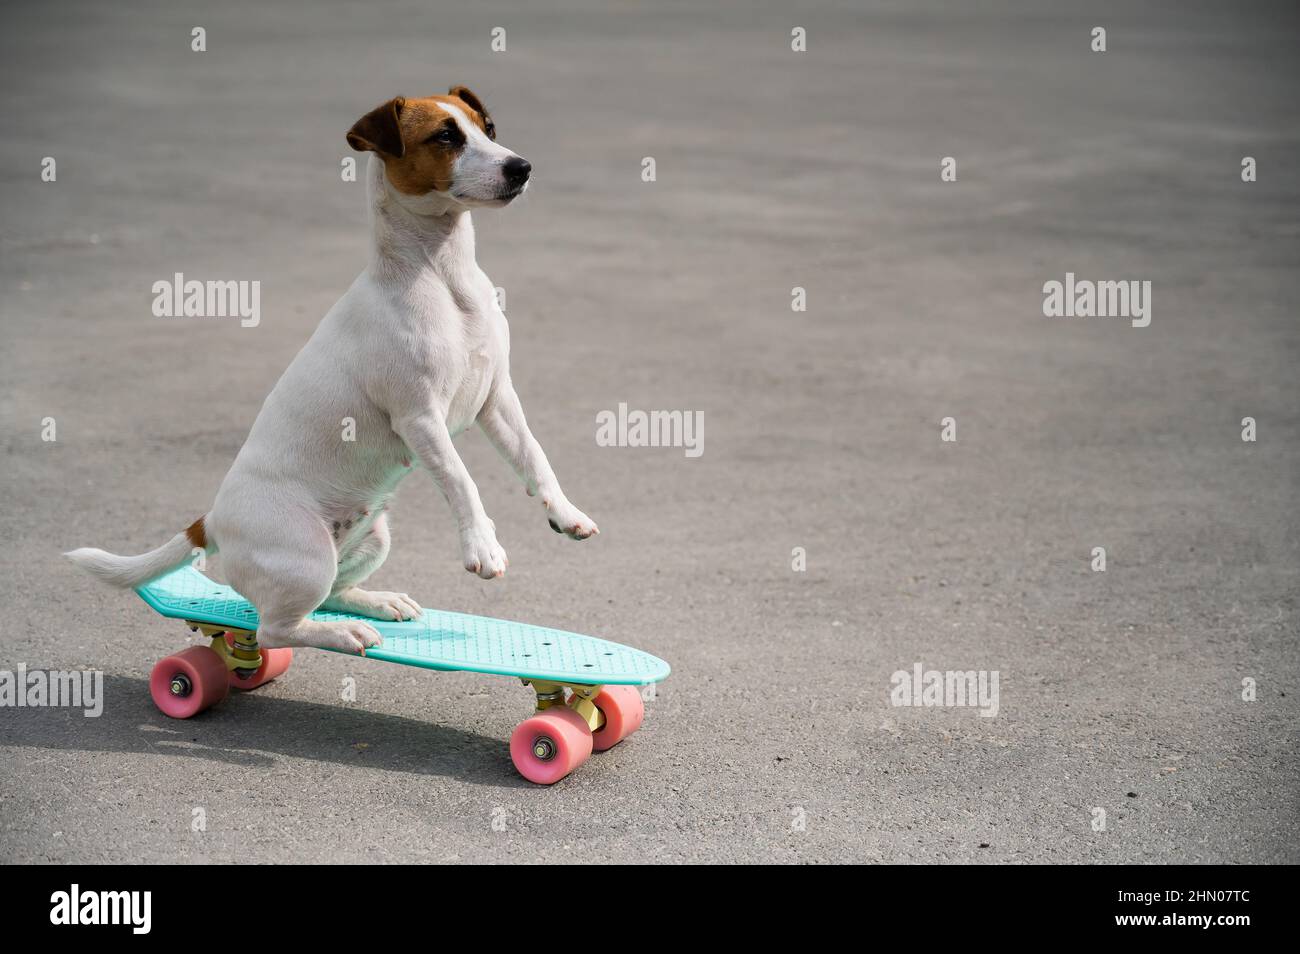 Transplanteren Middag eten Ideaal Skateboard dog skateboarding hi-res stock photography and images - Page 2 -  Alamy